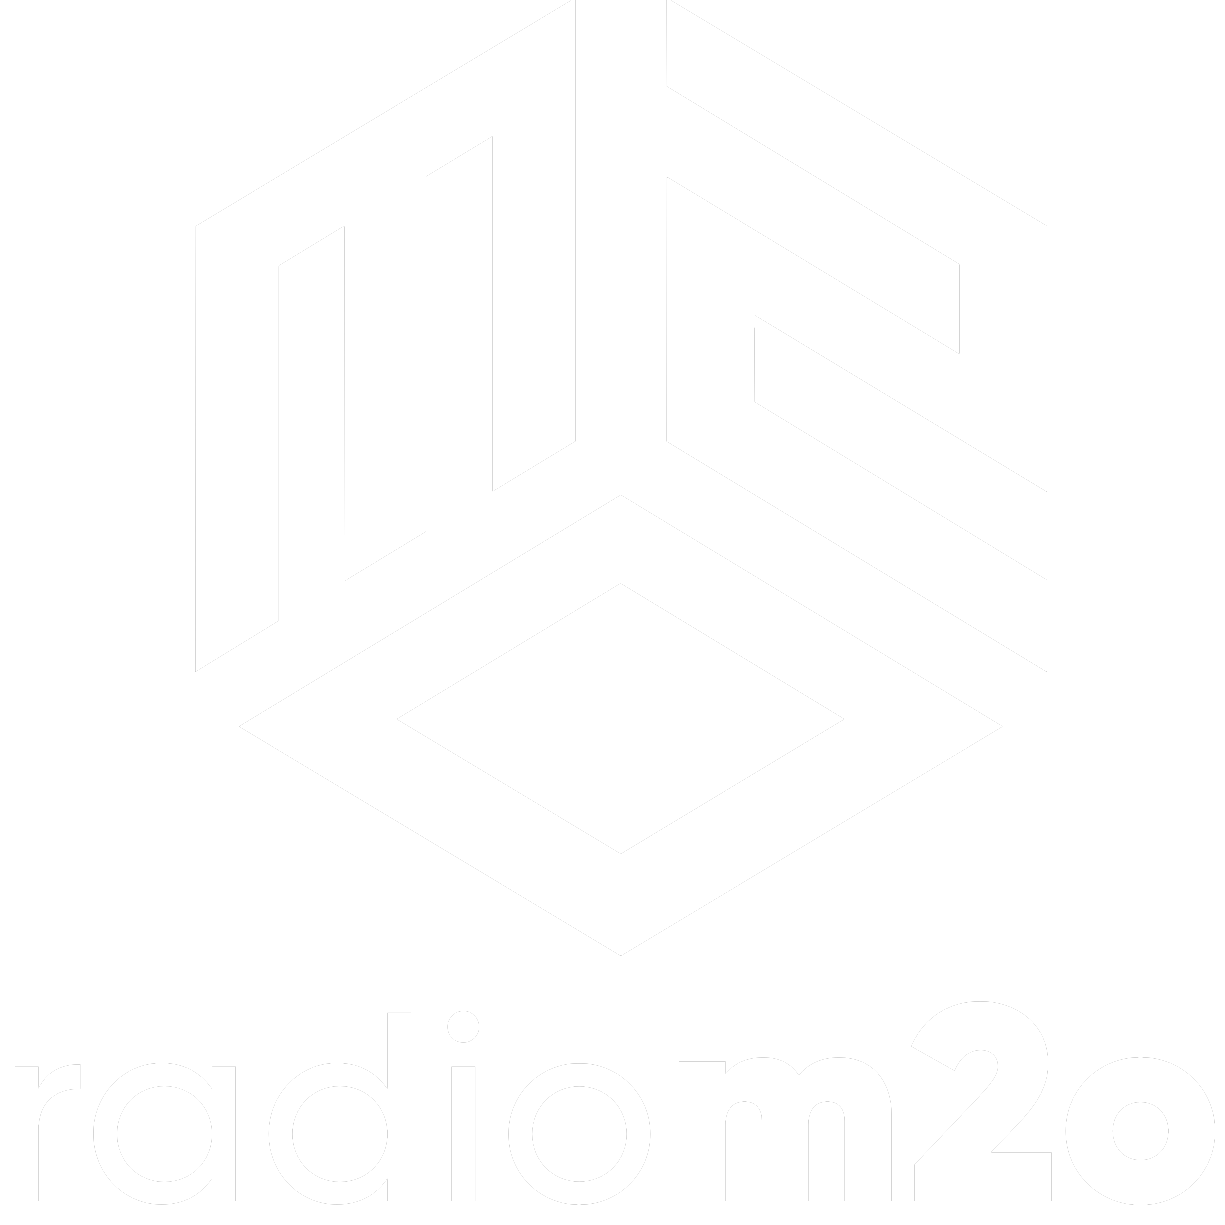 Radio m20 